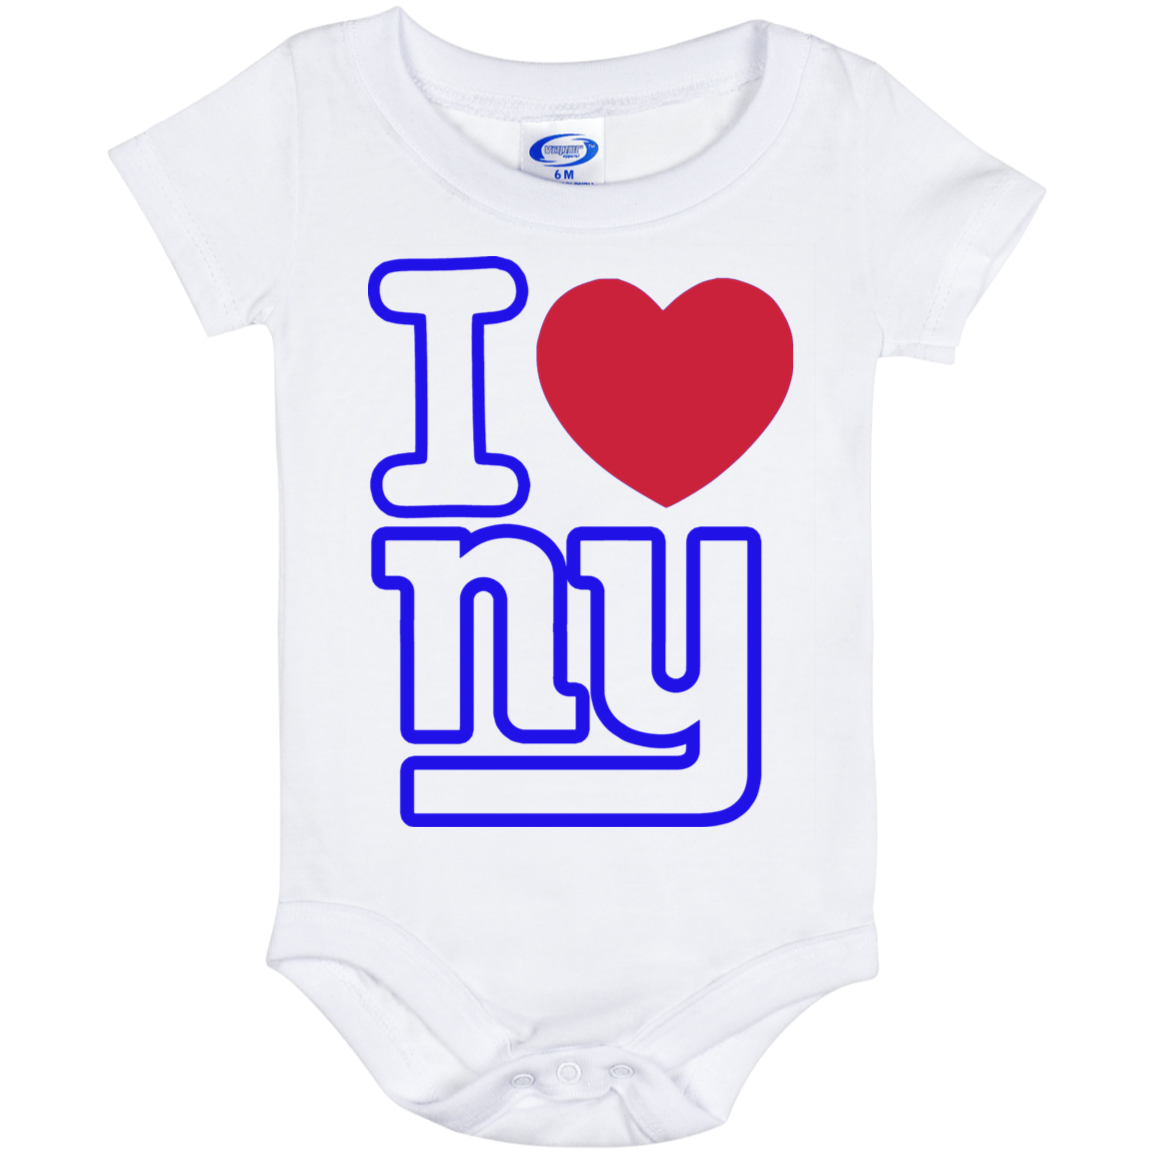 ArtichokeUSA Custom Design. I heart New York Giants. NY Giants Football Fan Art. Baby Onesie 6 Month